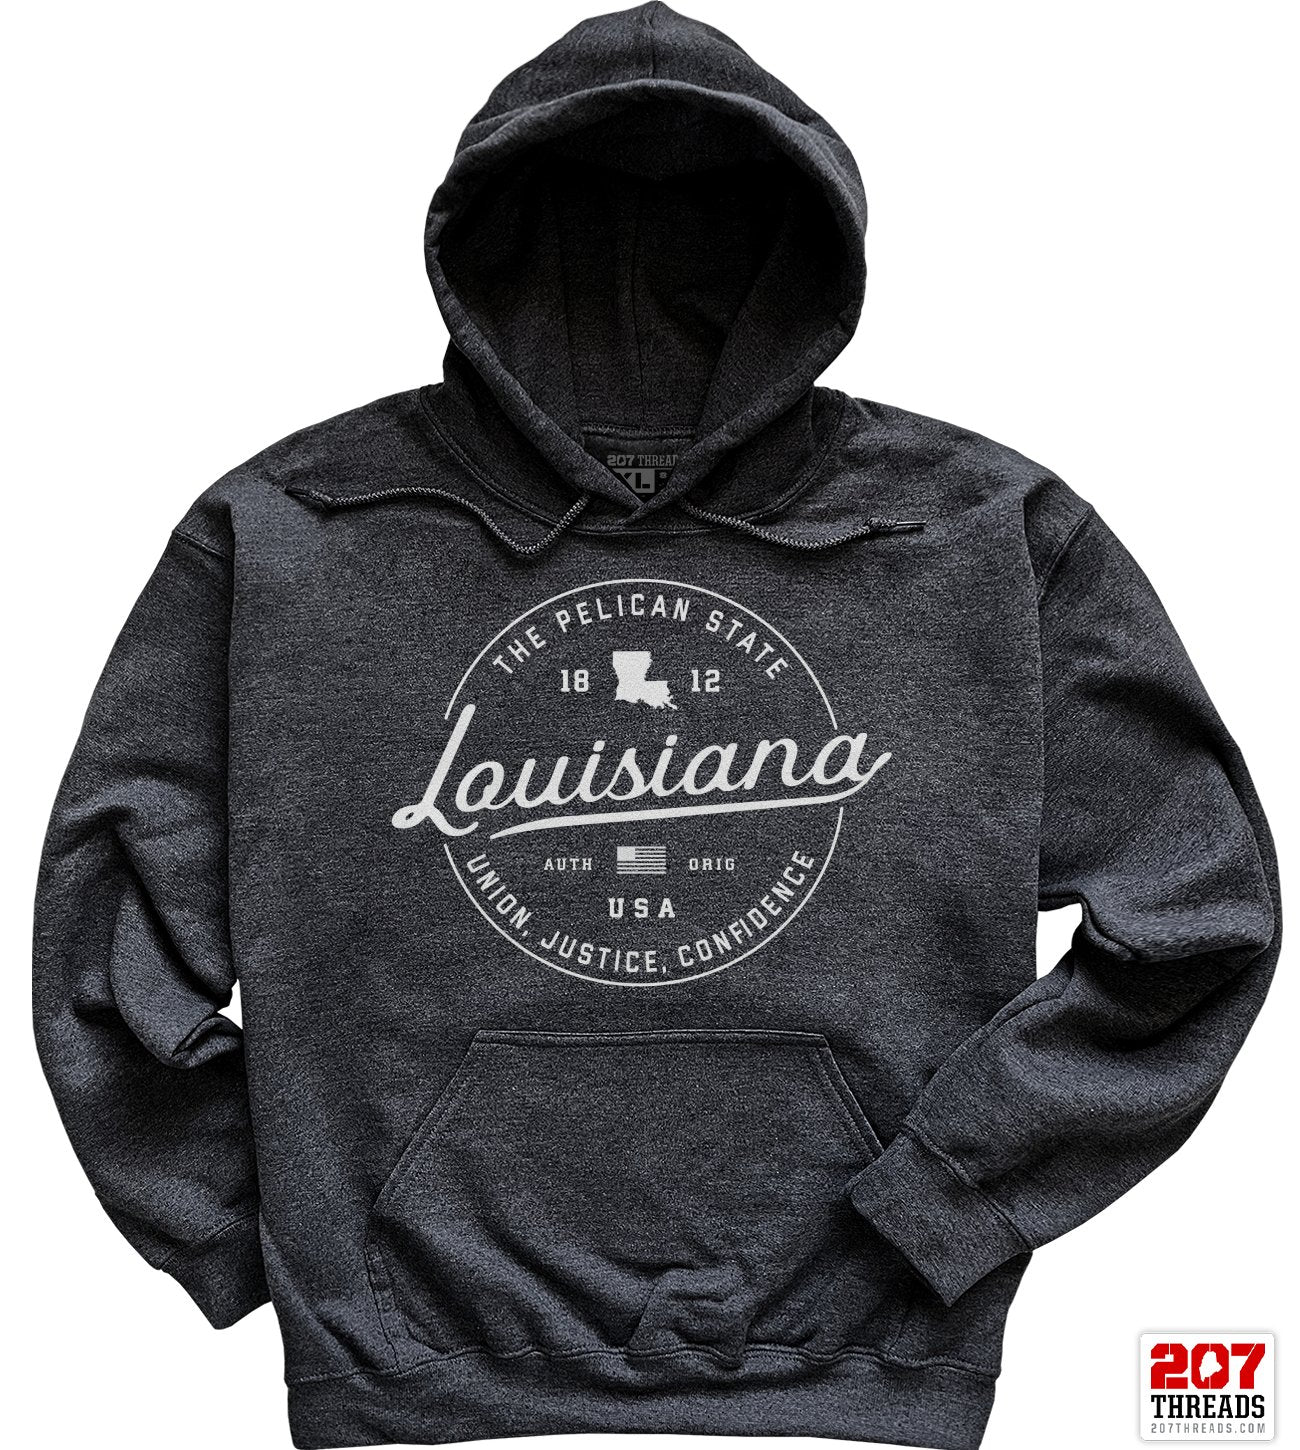 State of Louisiana Hoodie Sweatshirt